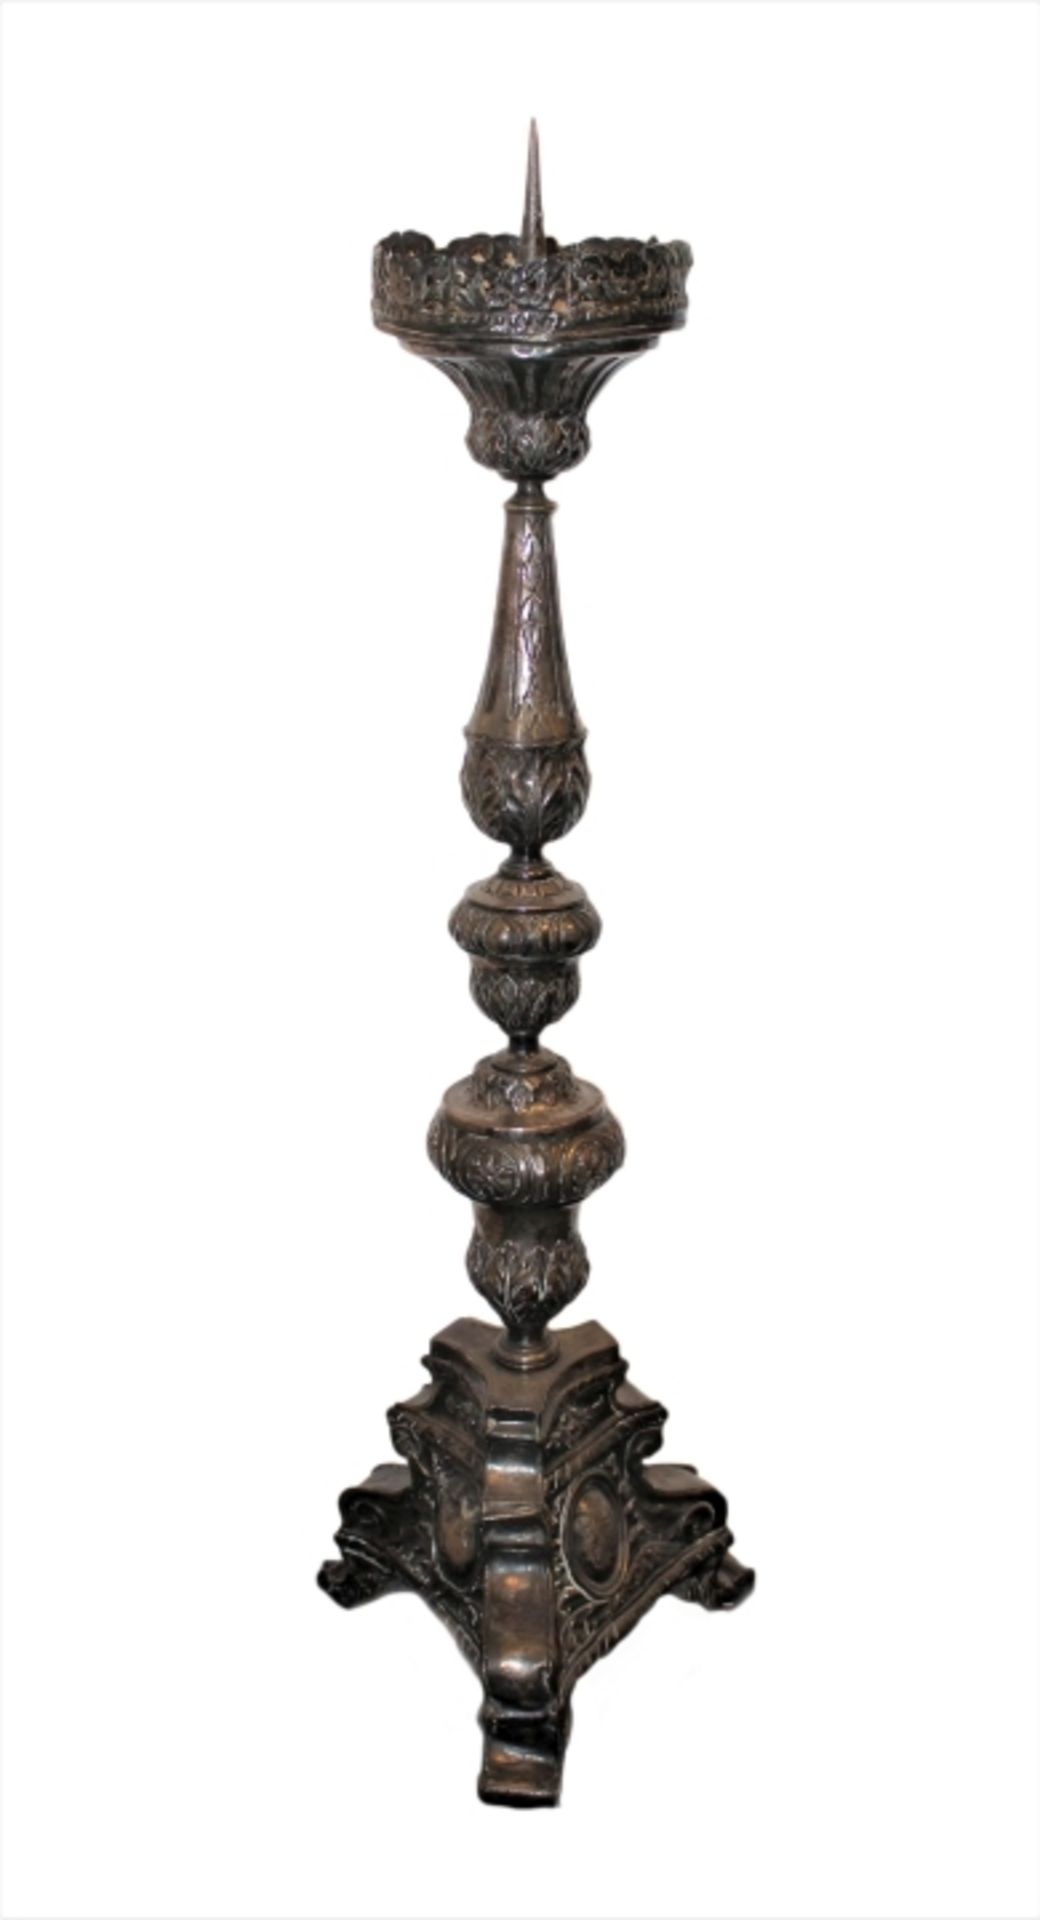 Großer Kerzenleuchter - 18. Jahrhundert Kupfer versilbert, reich verziert mit Blattwerk,